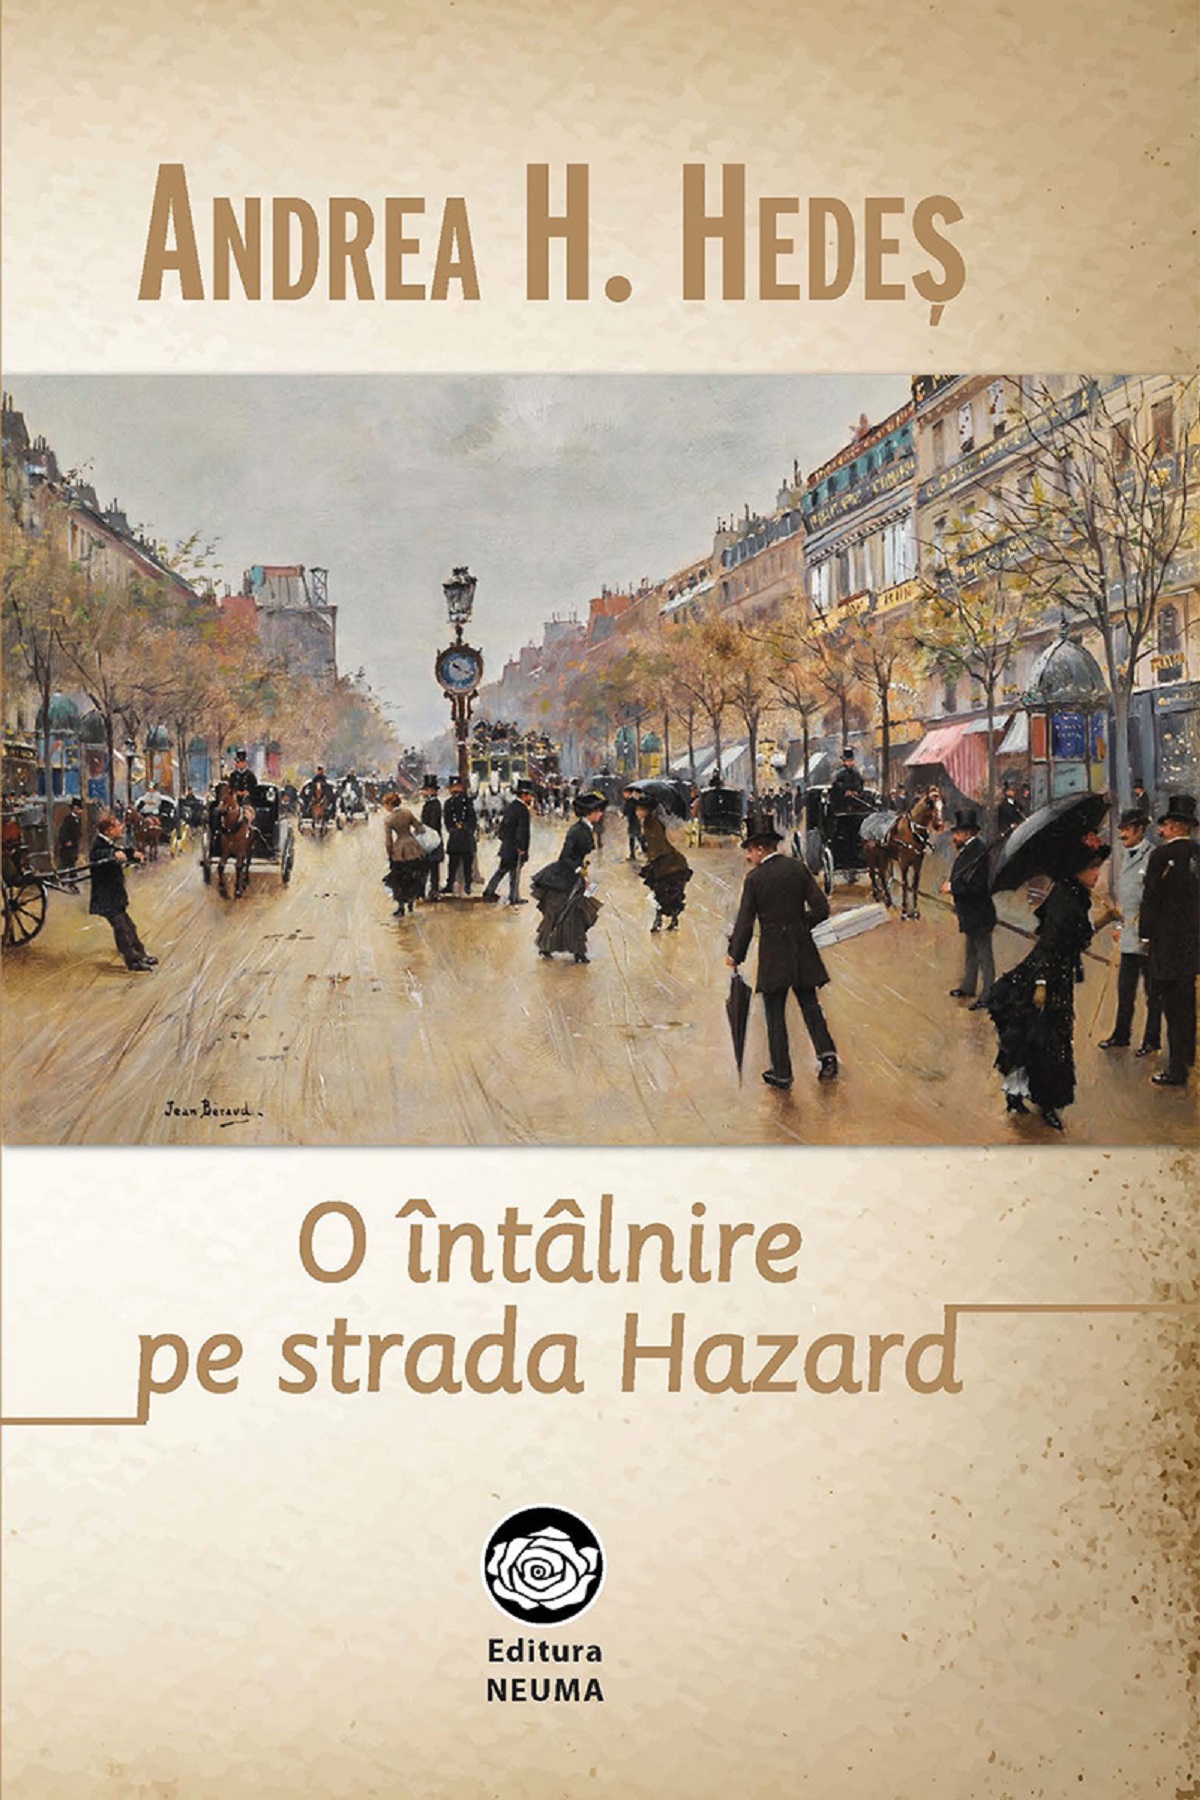 O intalnire pe strada Hazard - Andrea H. Hedes